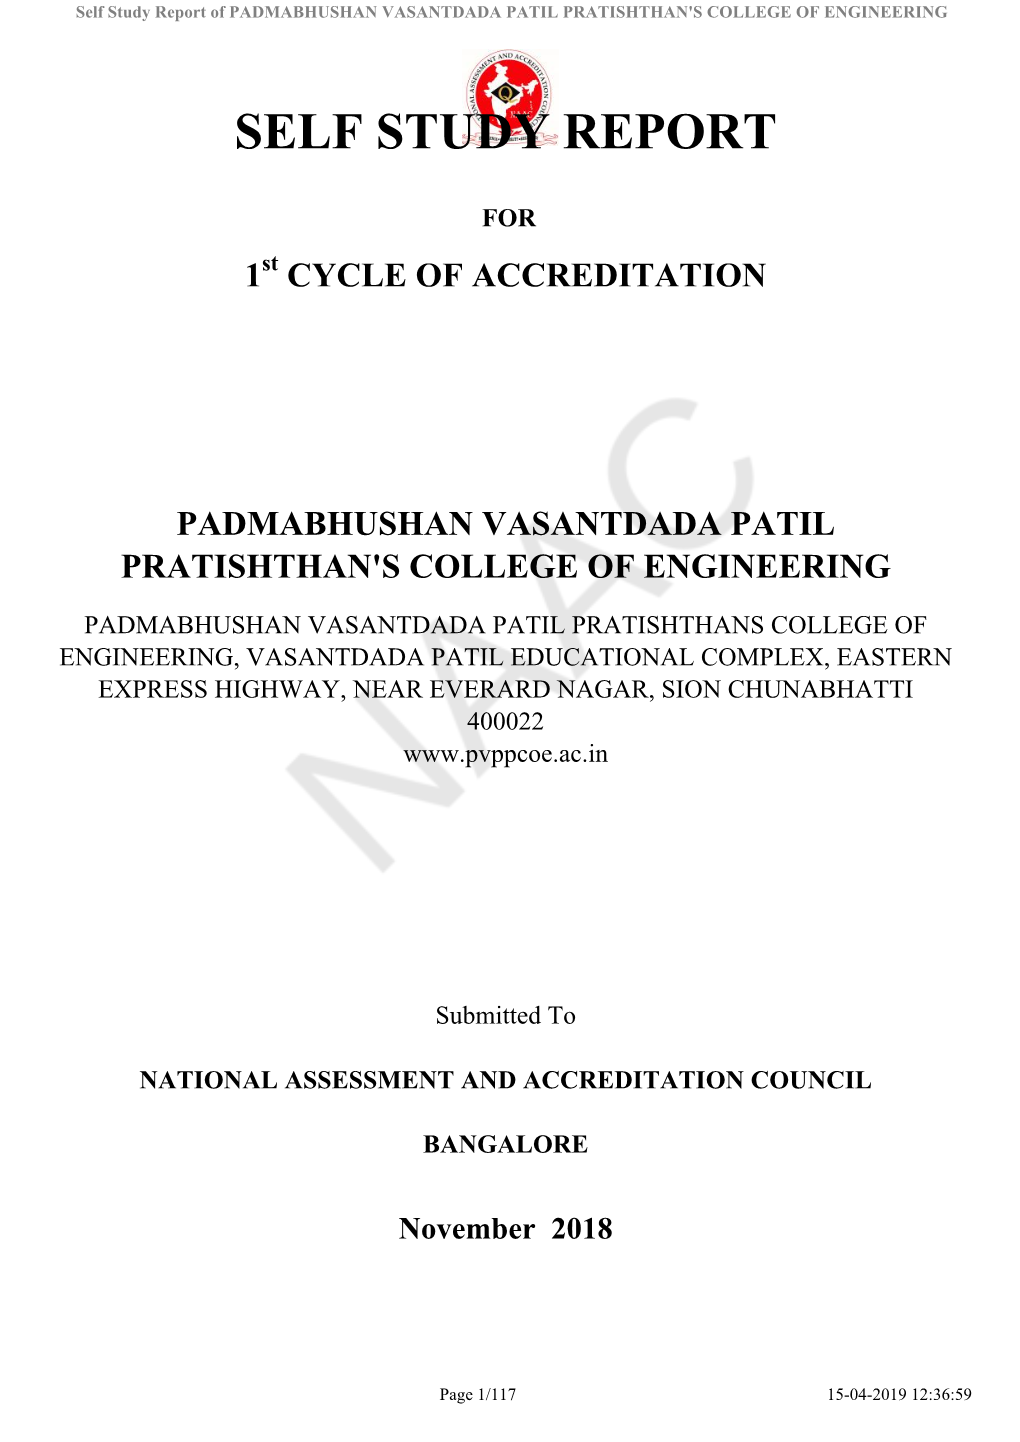 Self Study Report of PADMABHUSHAN VASANTDADA PATIL PRATISHTHAN's COLLEGE of ENGINEERING